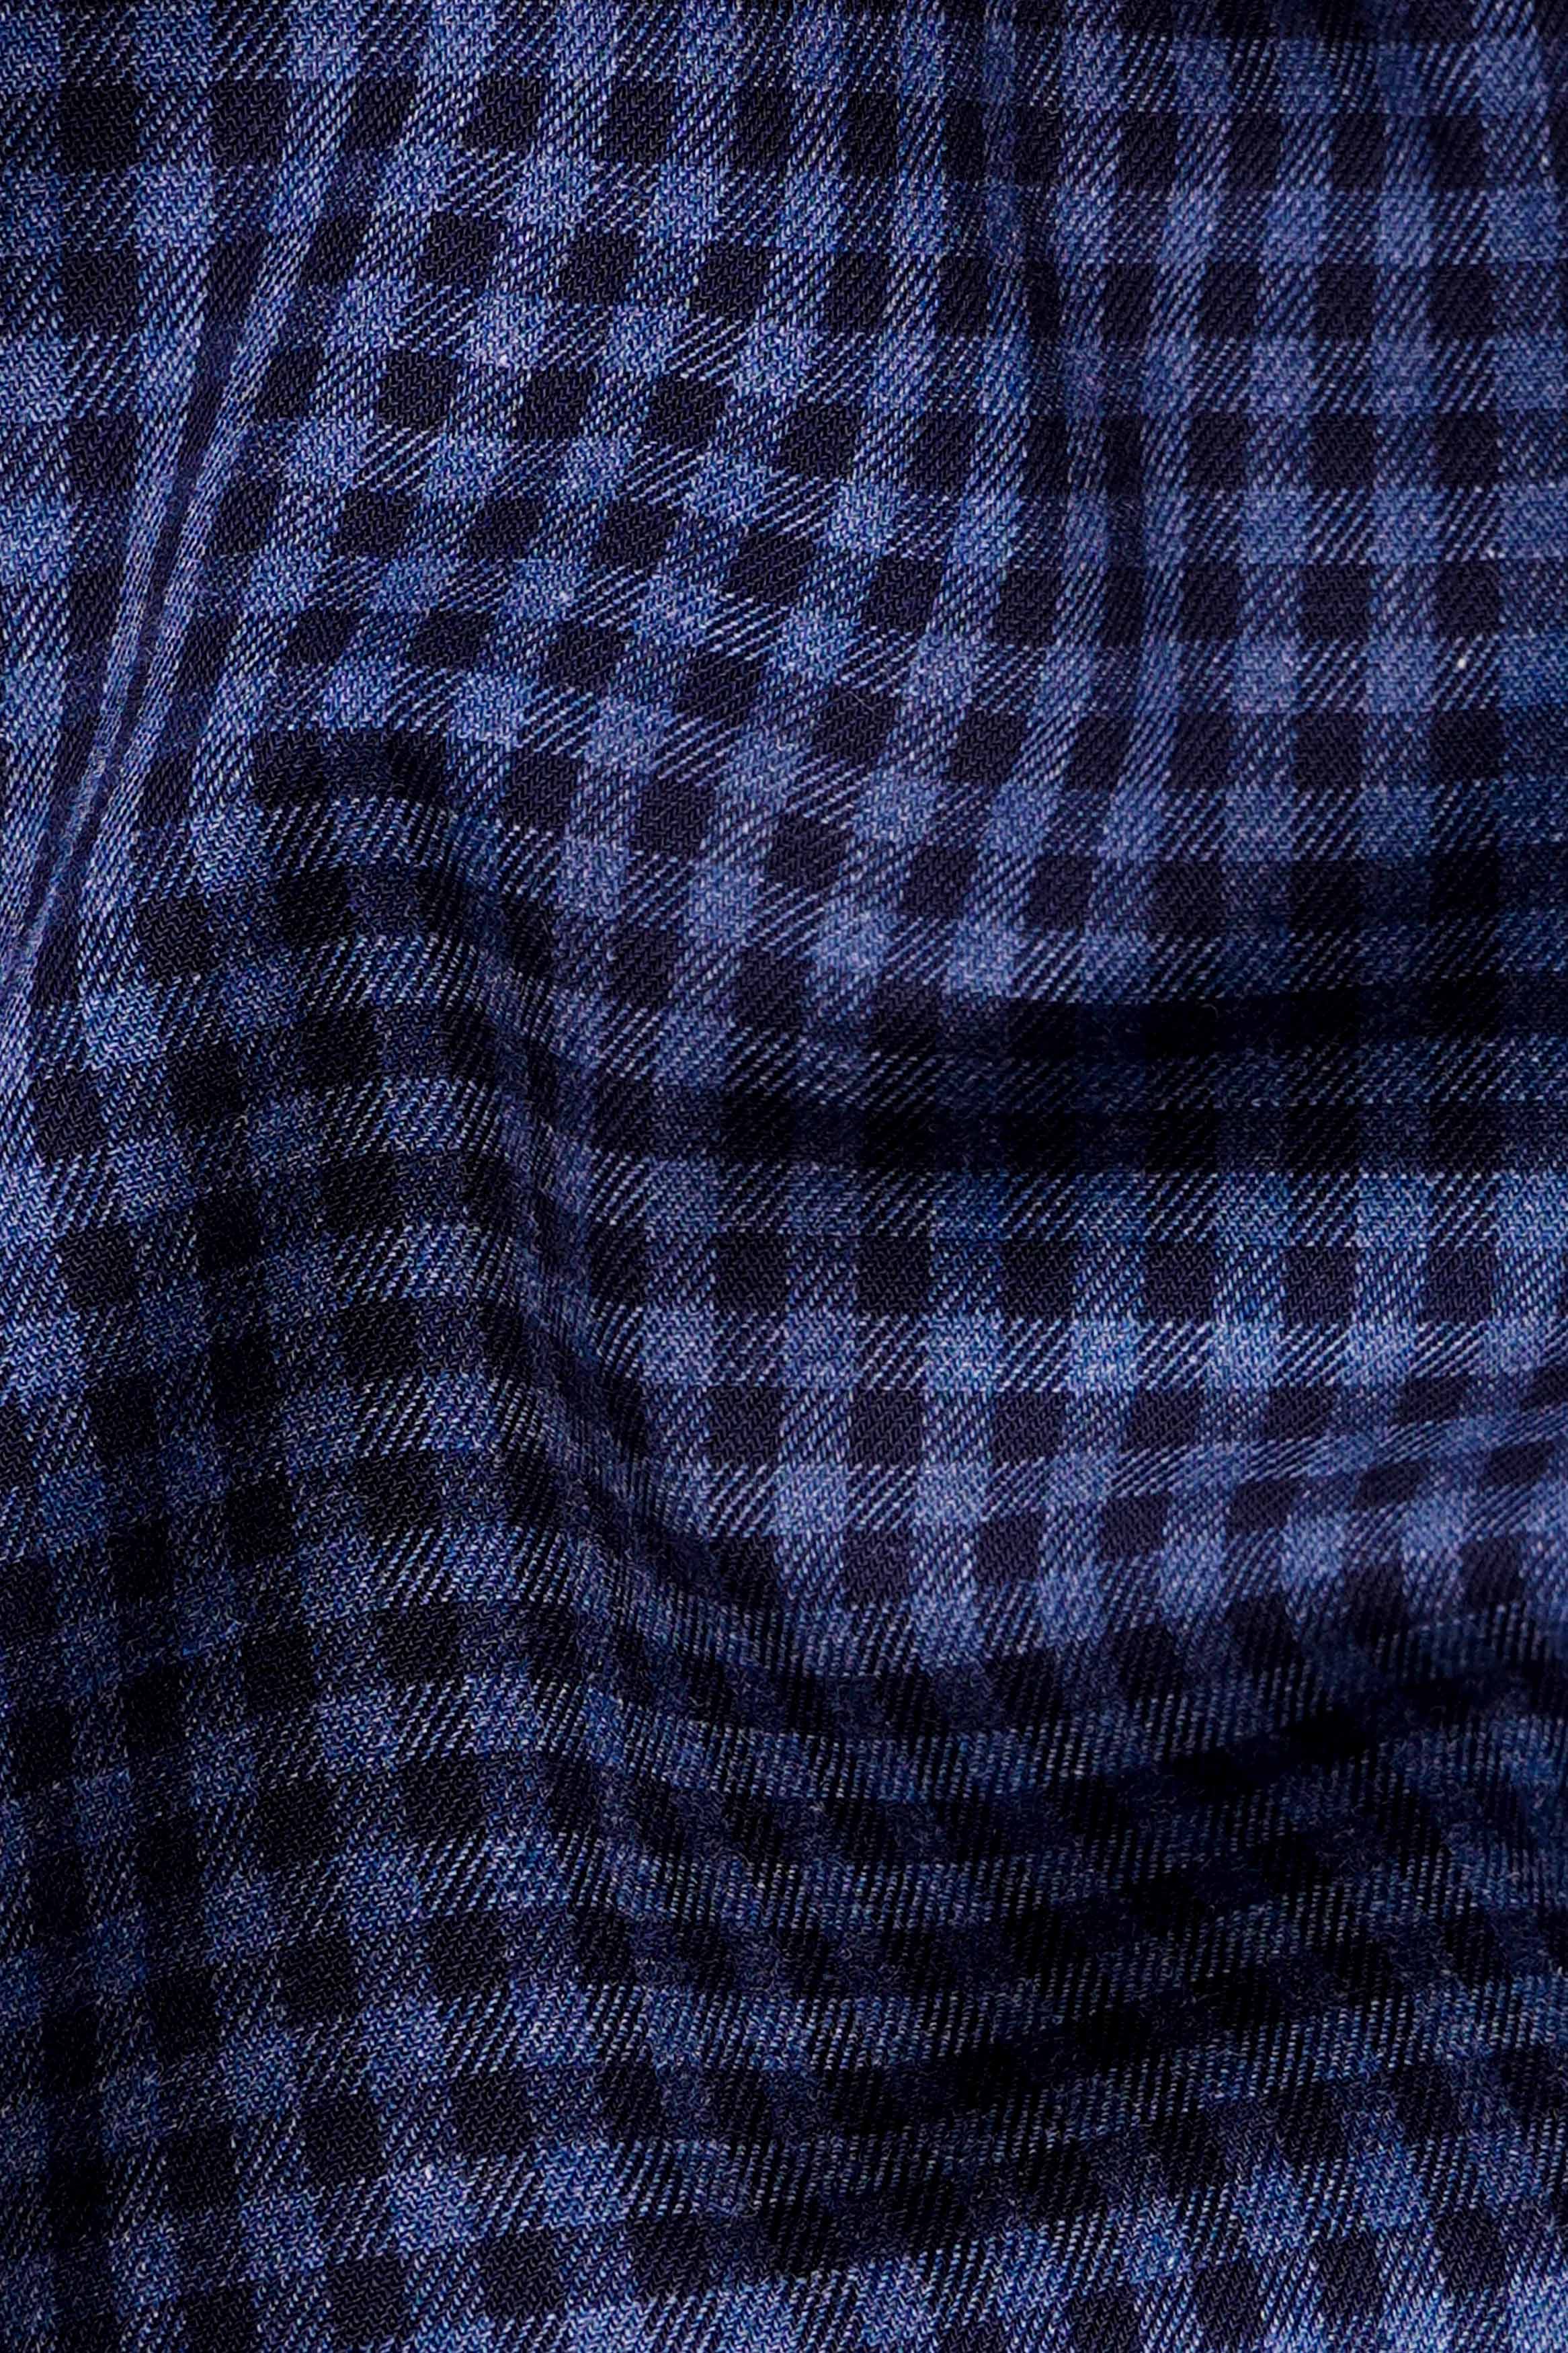 Cloud Burst Blue and Heather Purple Gingham Checkered Twill Premium Cotton Shirt